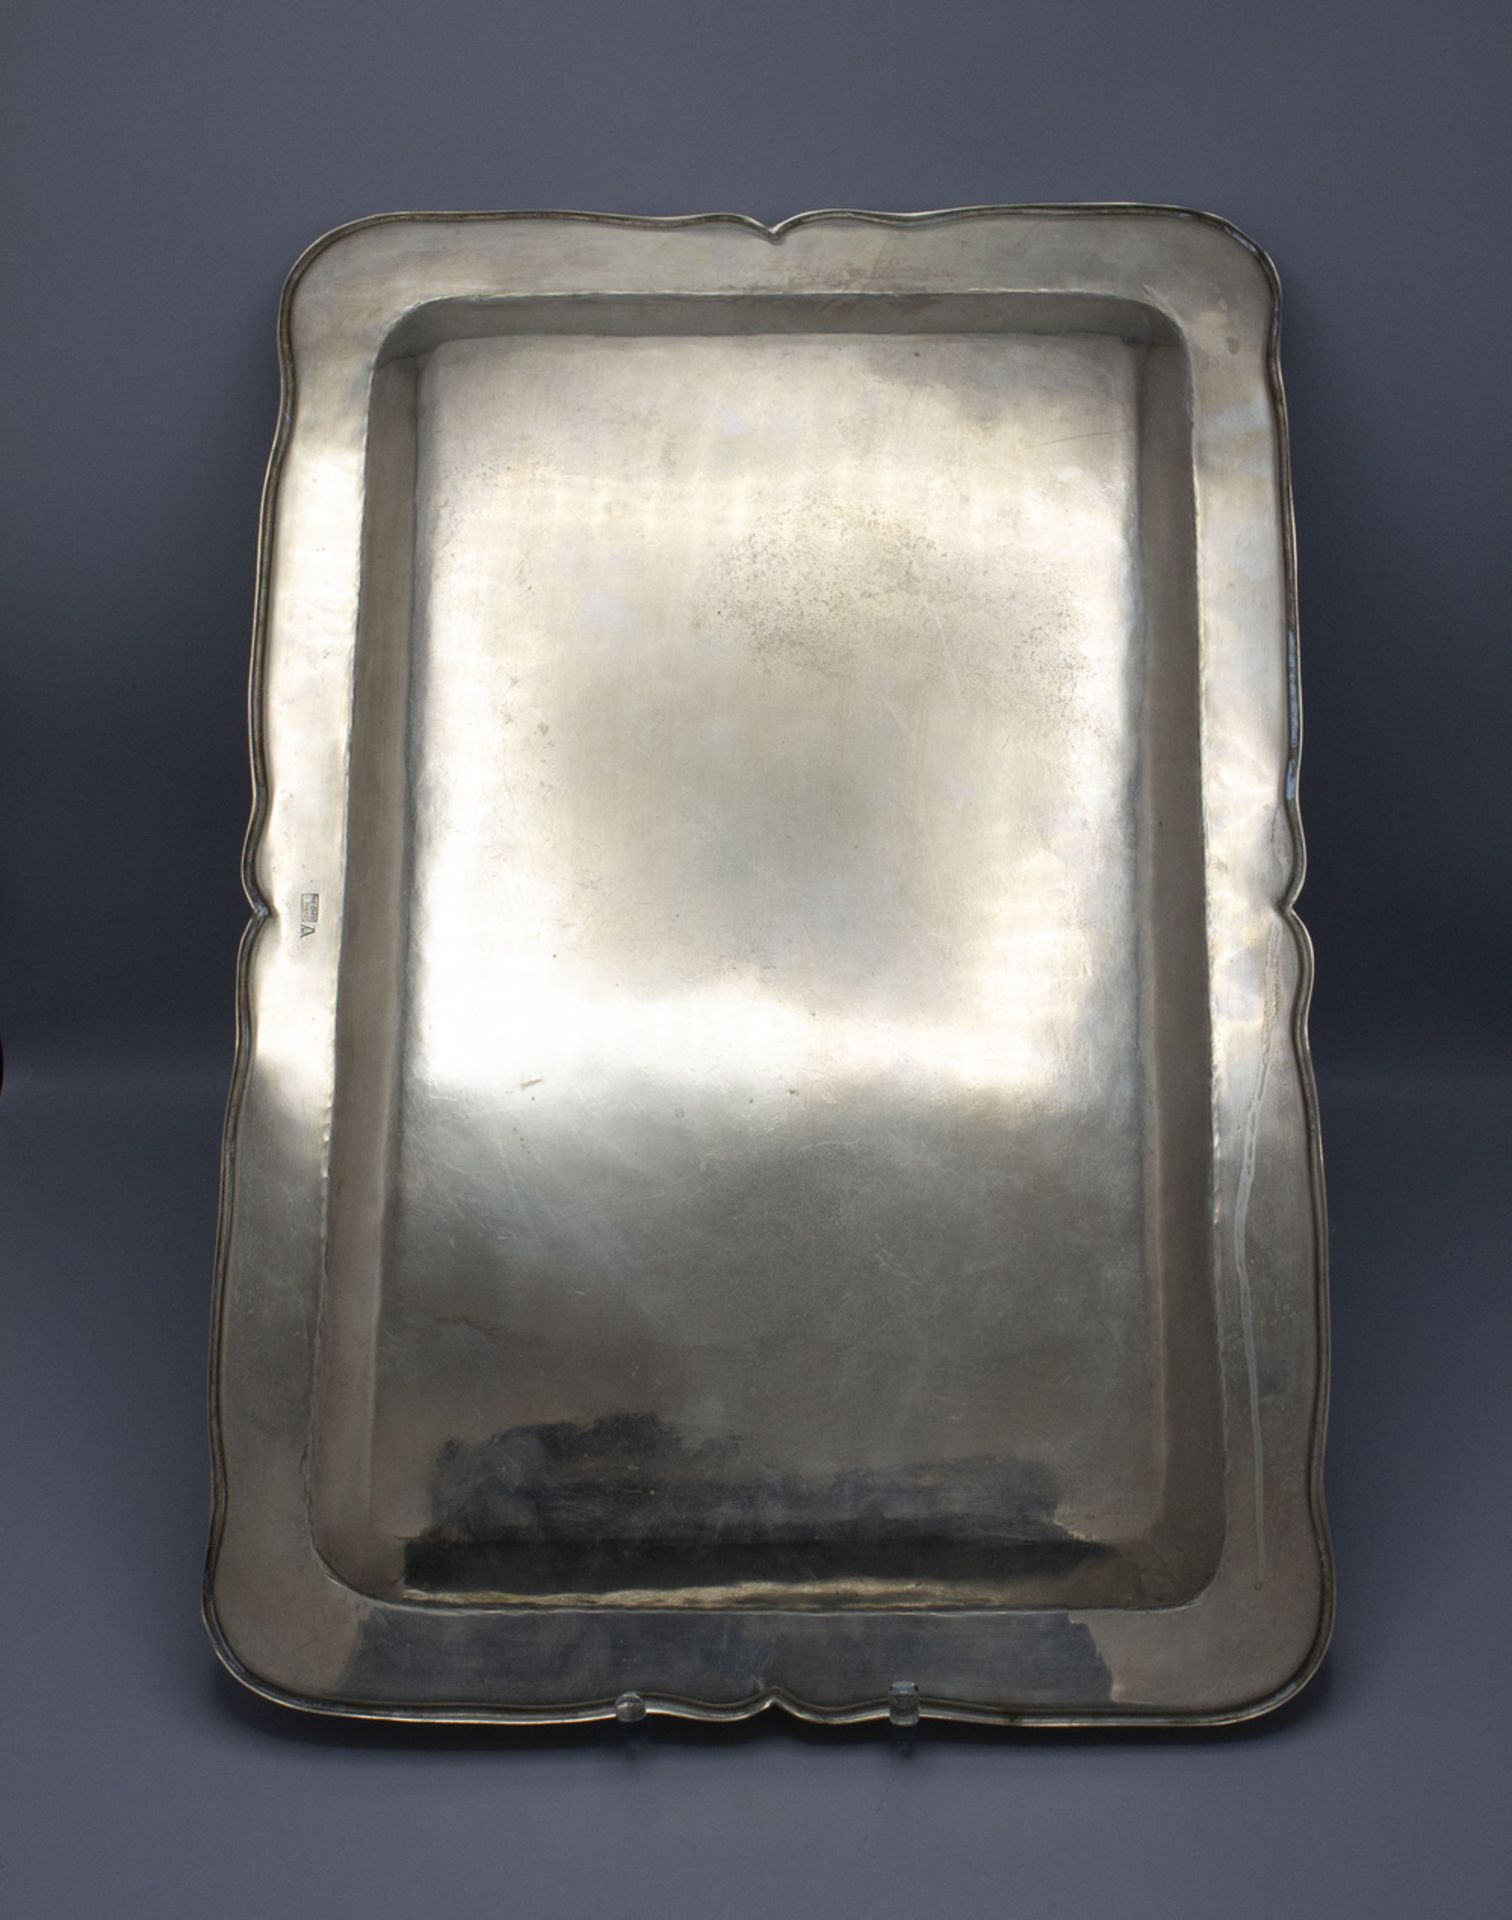 Servierplatte / A serving plate, Spanien, 20. Jh. - Image 2 of 3